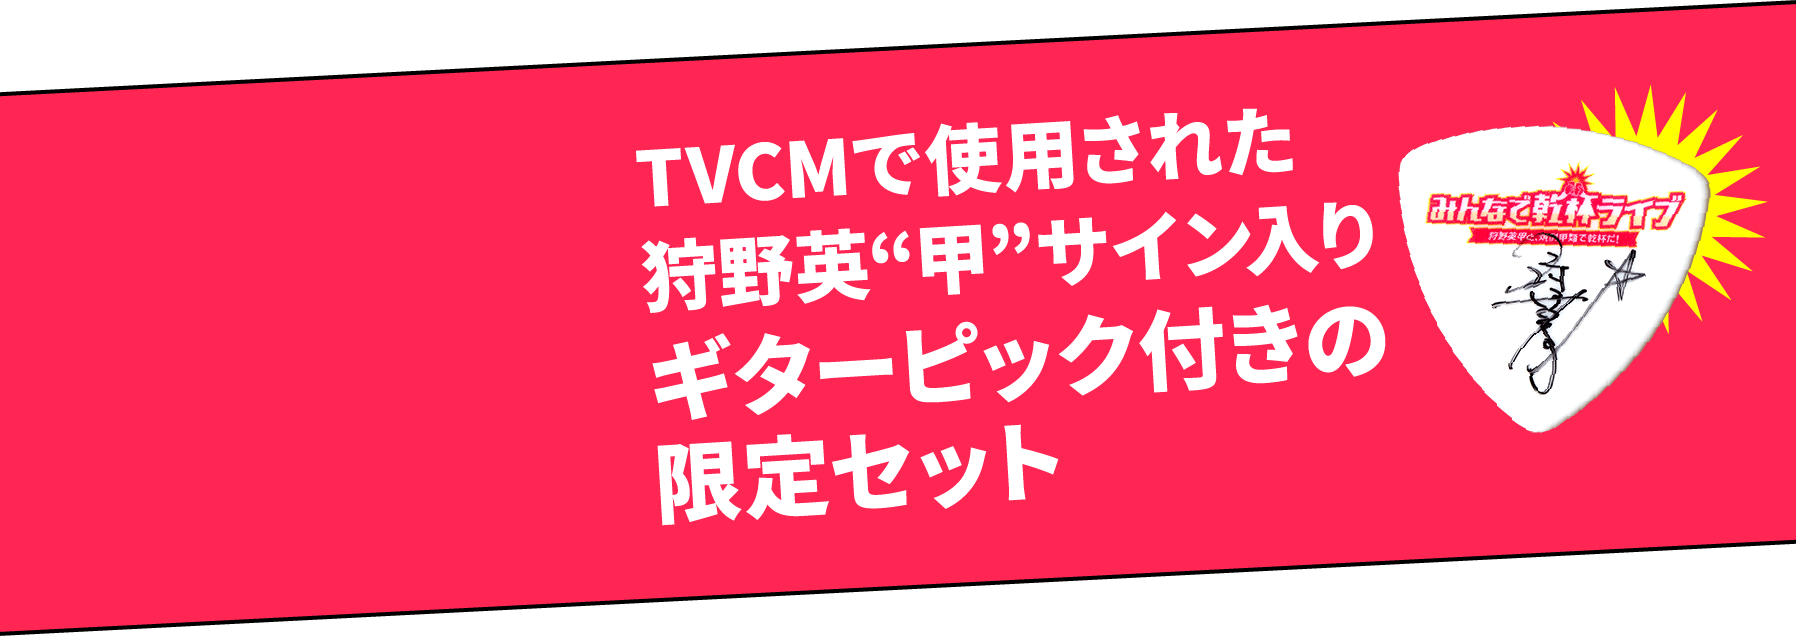 TVCMで使用された狩野英“甲”サイン入りギターピック付きの限定セット